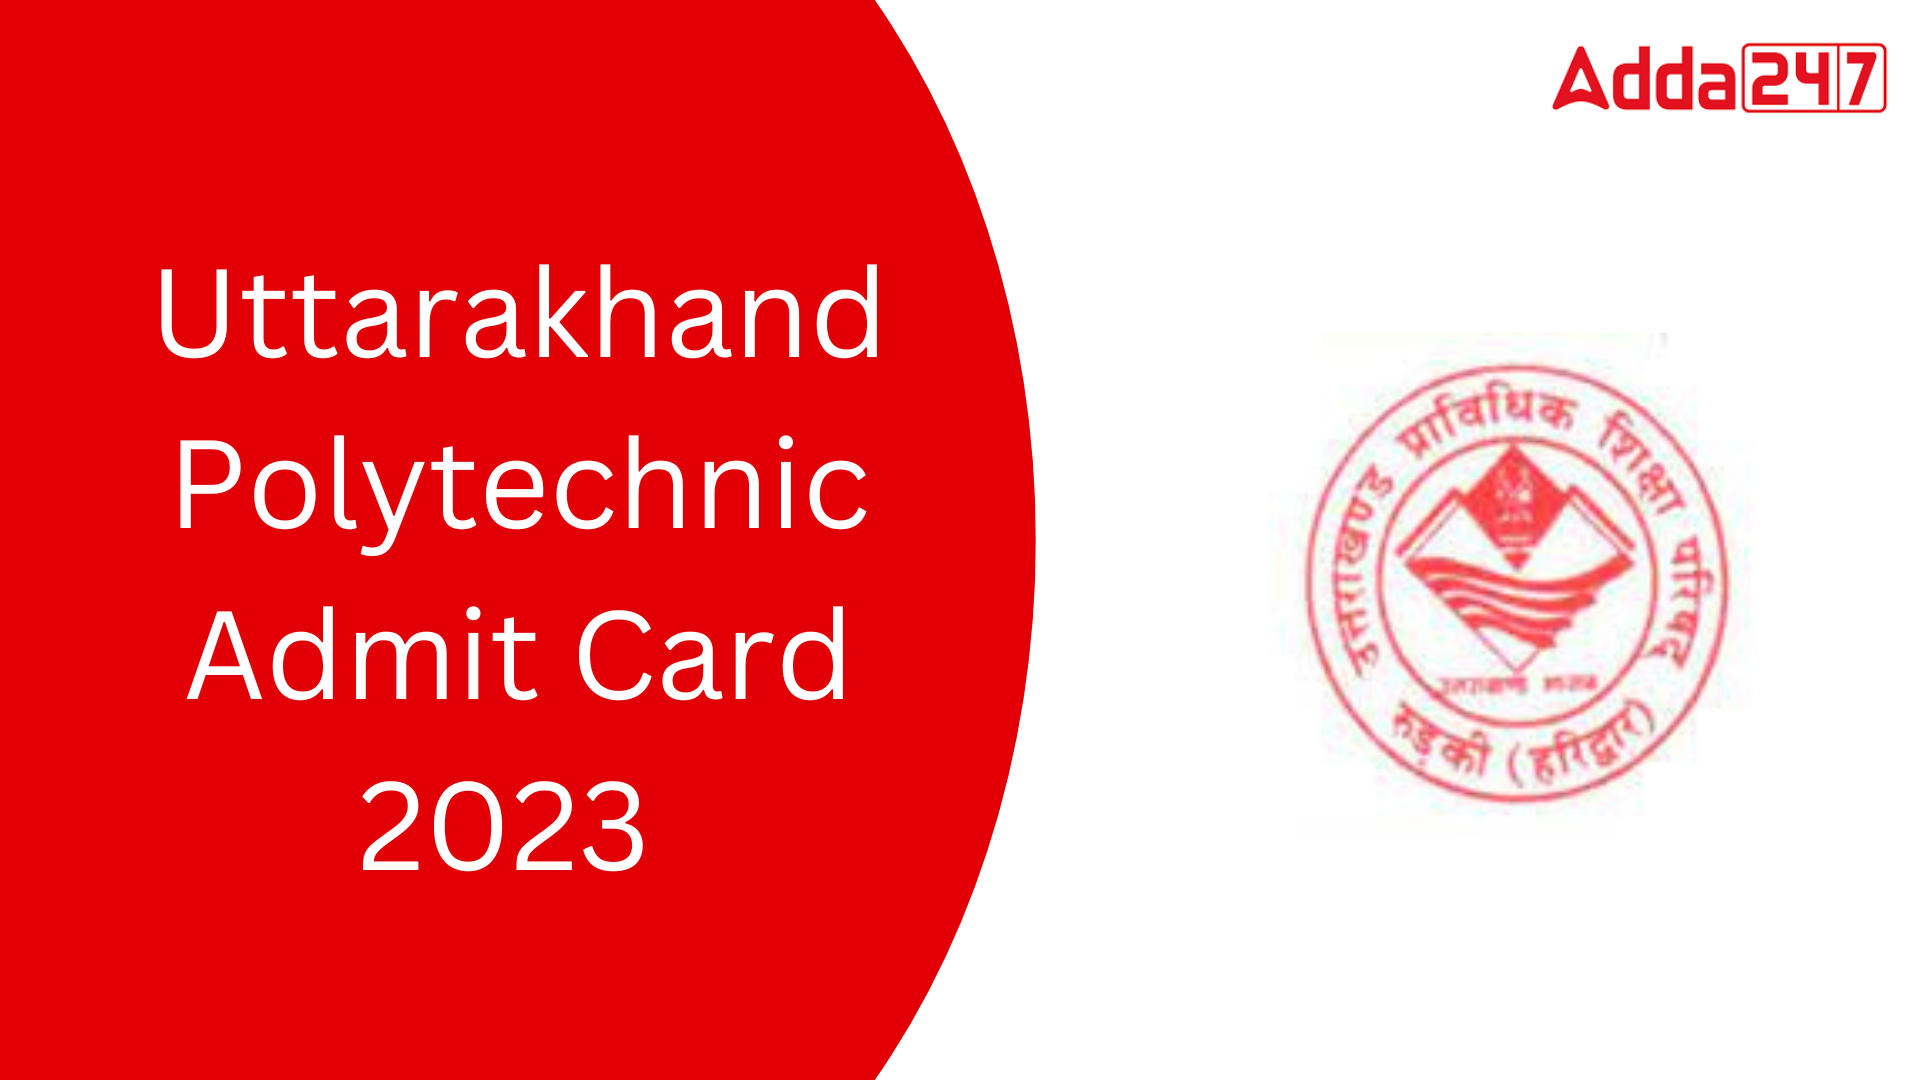 Uttarakhand Polytechnic Admit Card 2023